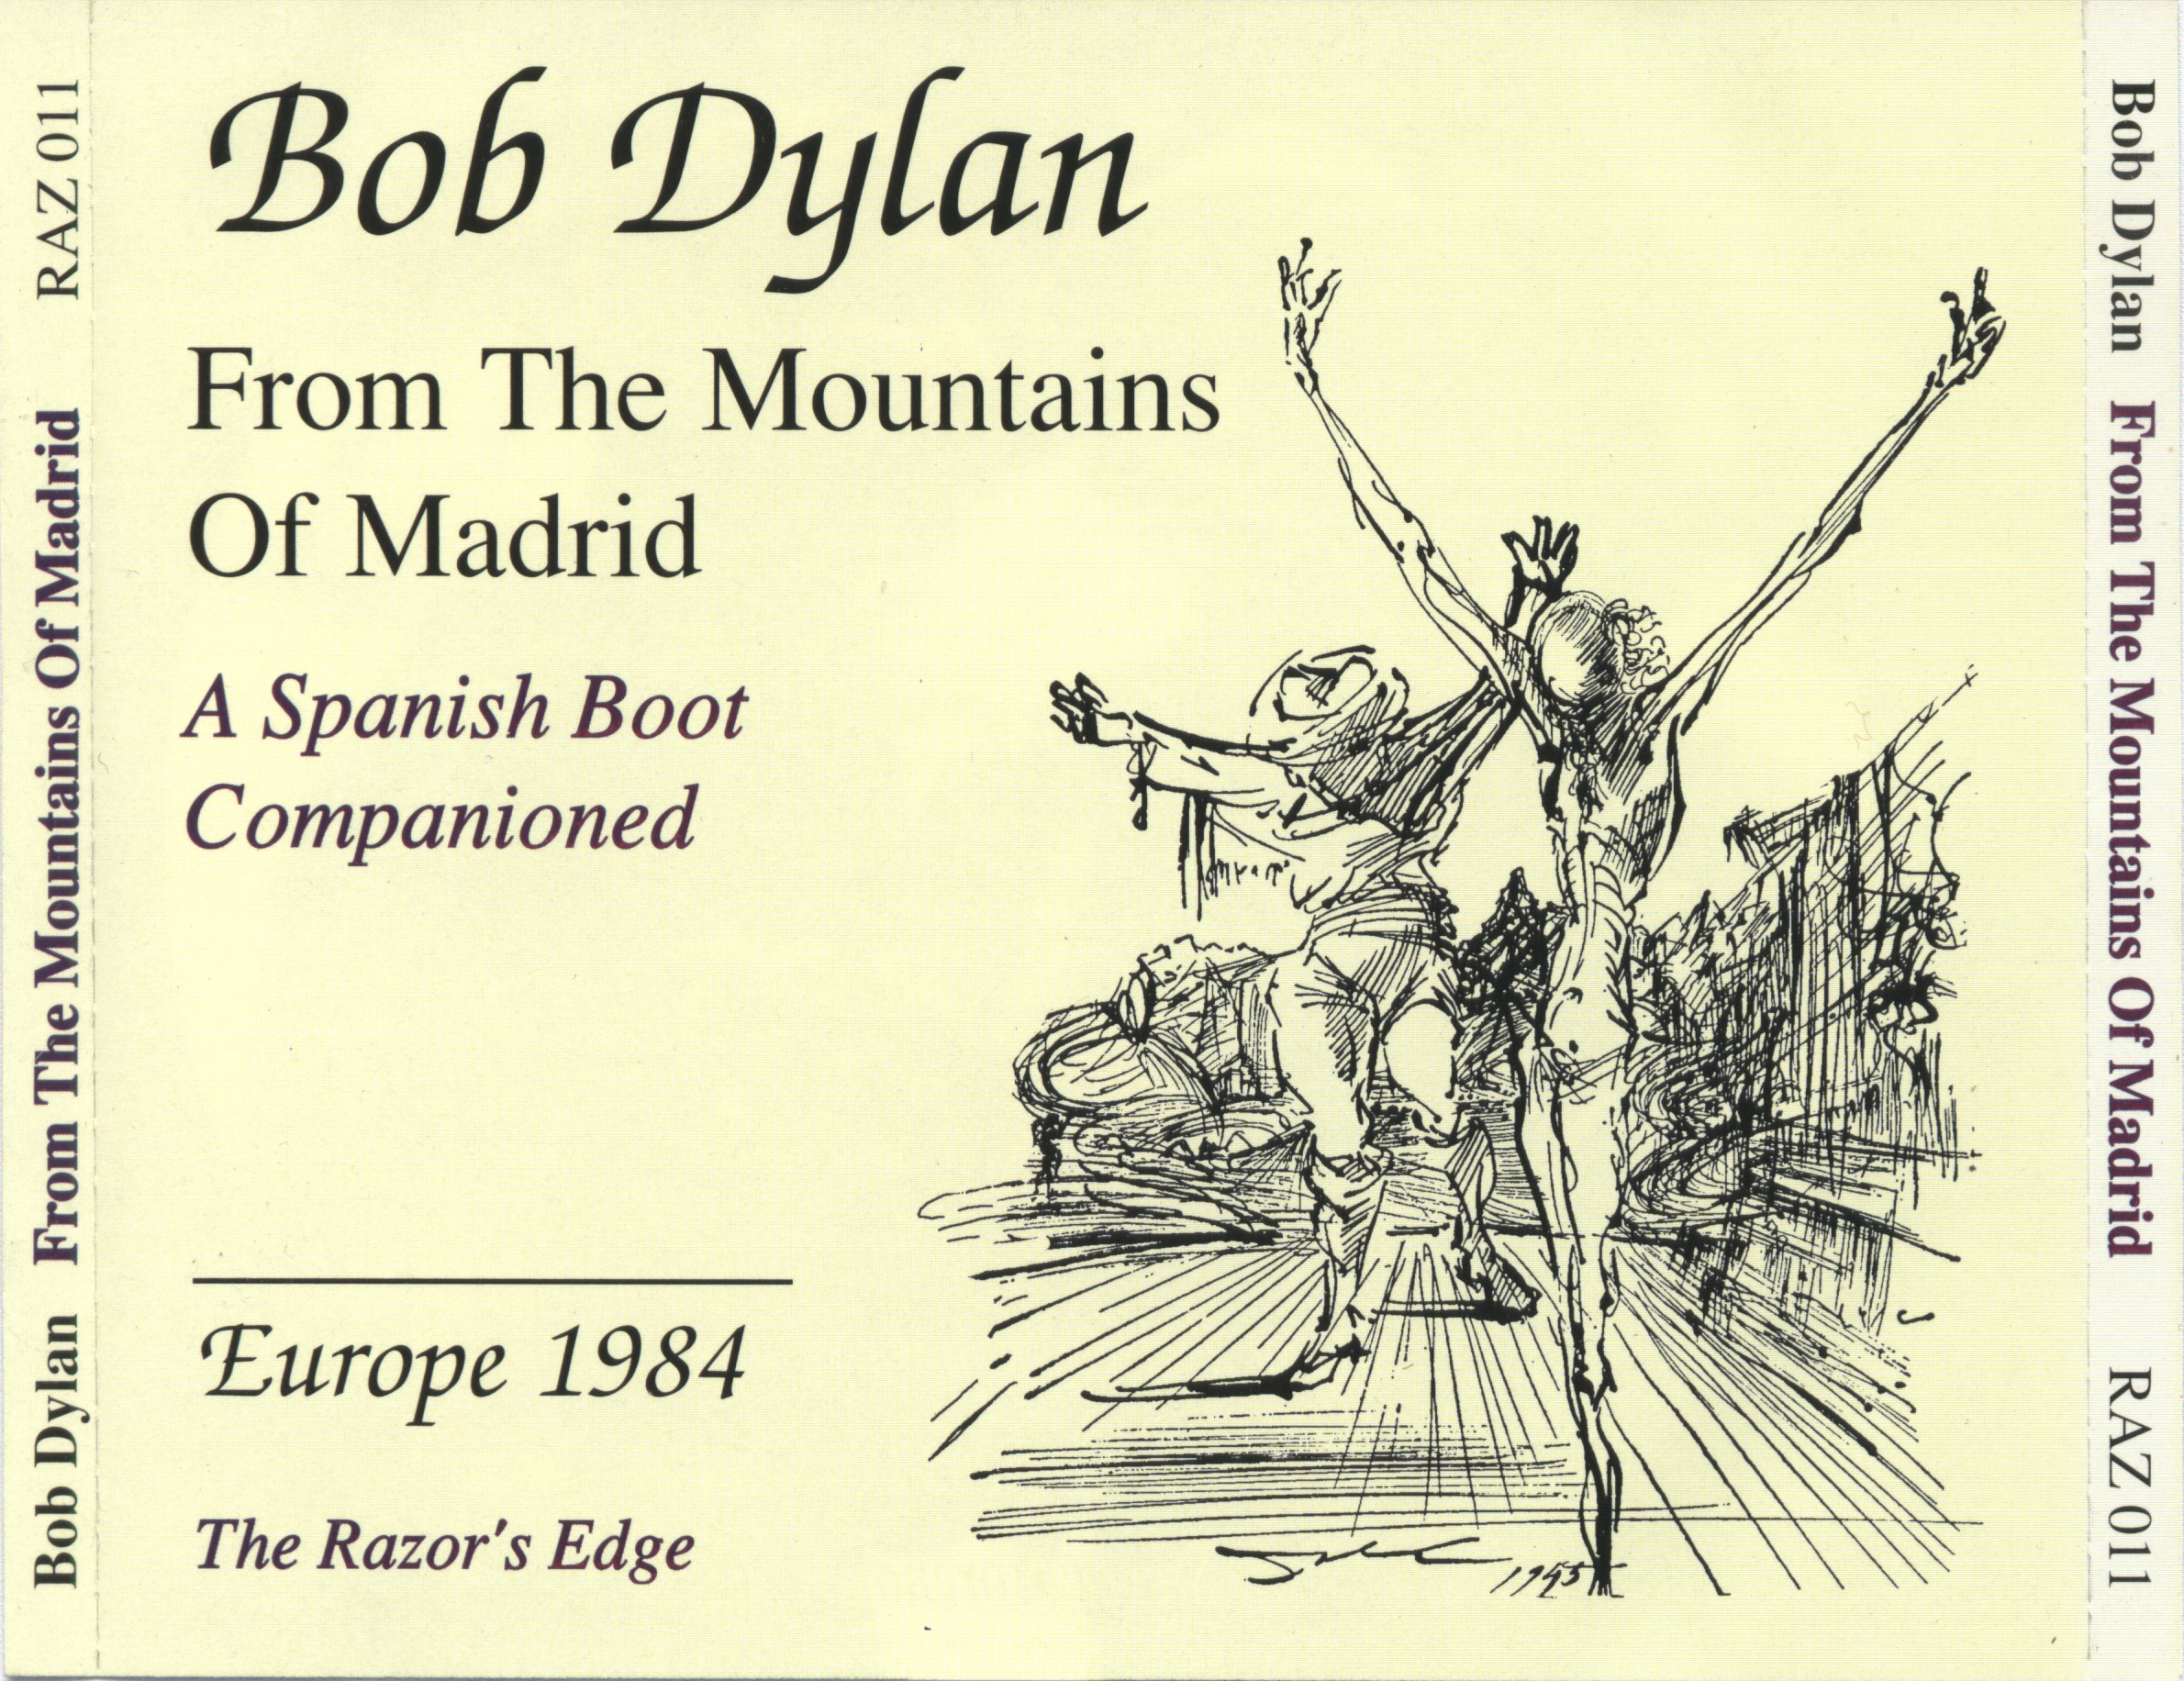 BobDylan1984-06EuropeanTour (5).jpg